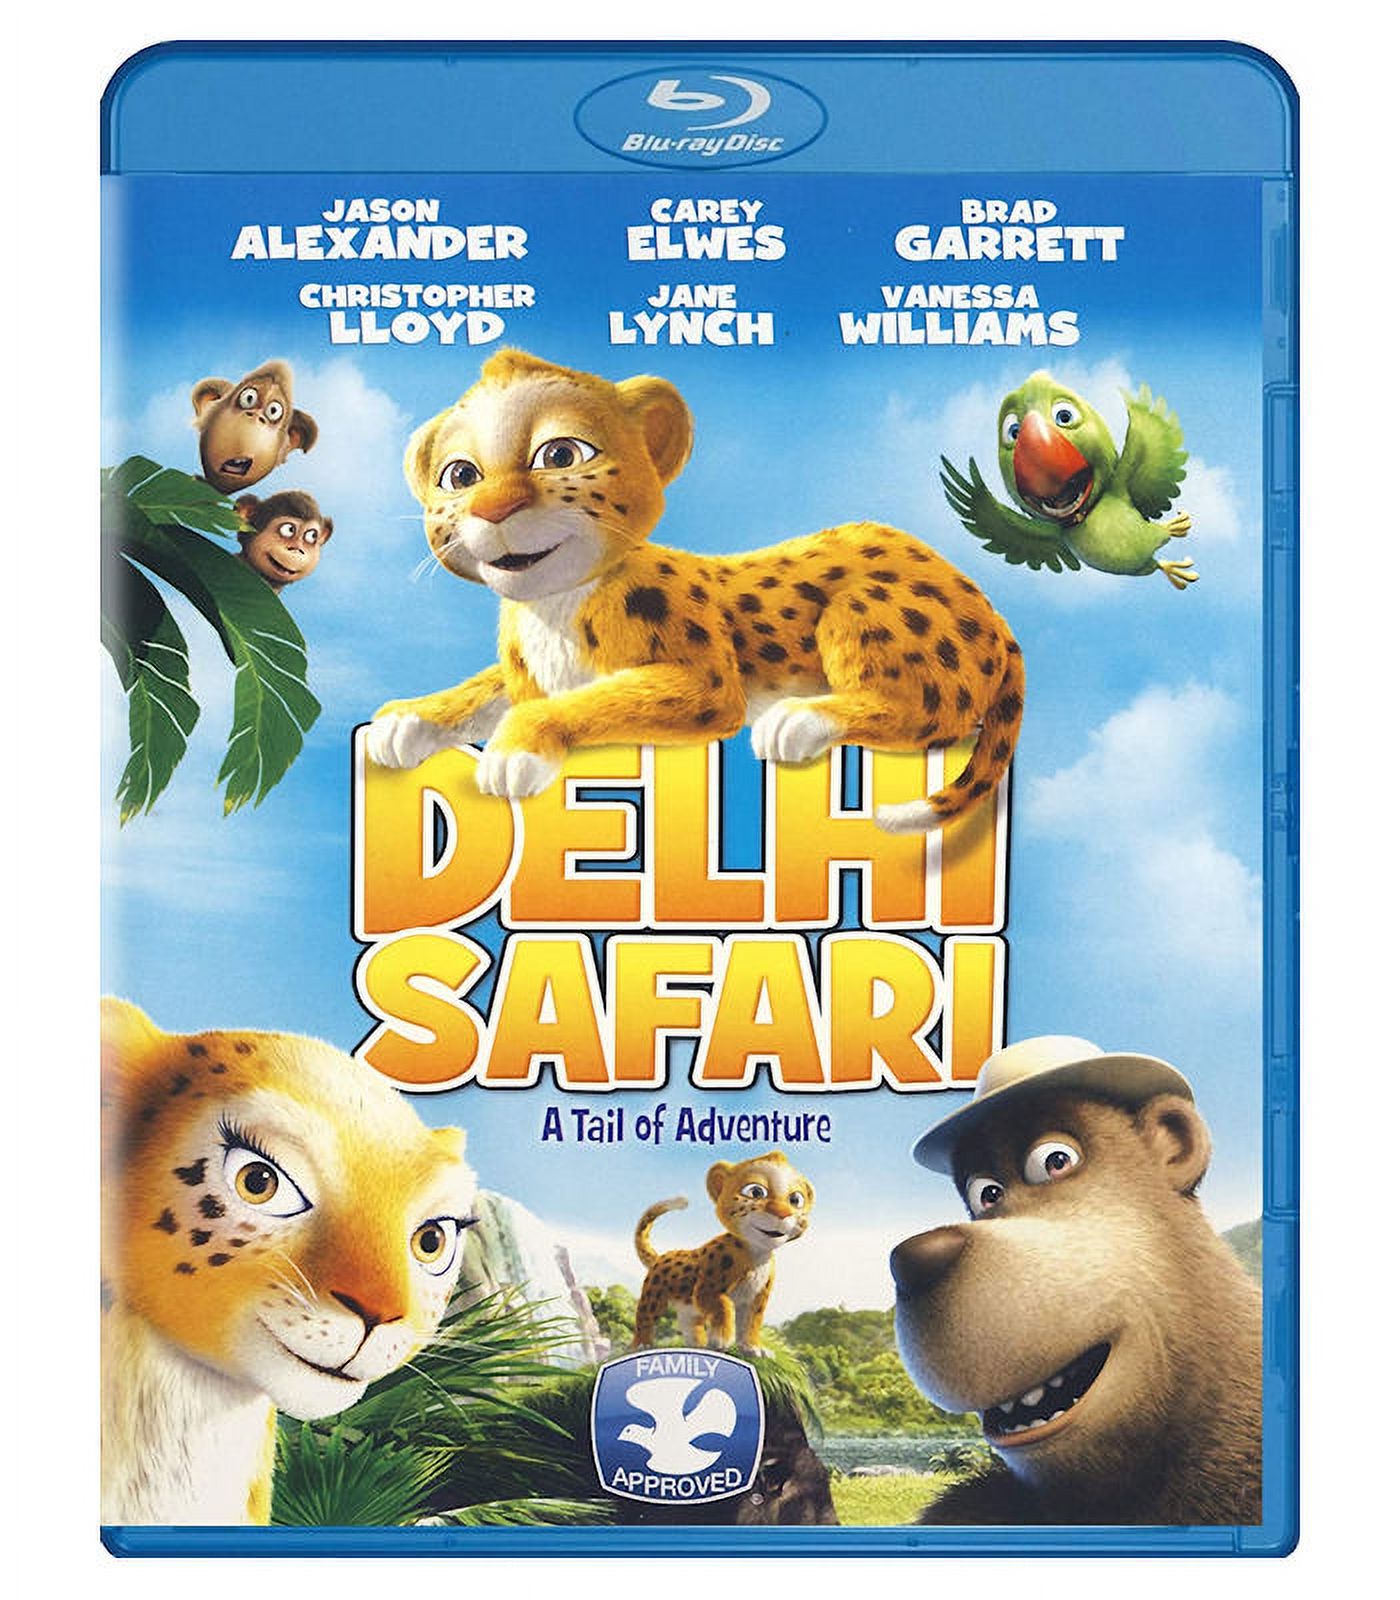 Delhi Safari Blu-ray Cary Elwes - image 1 of 2